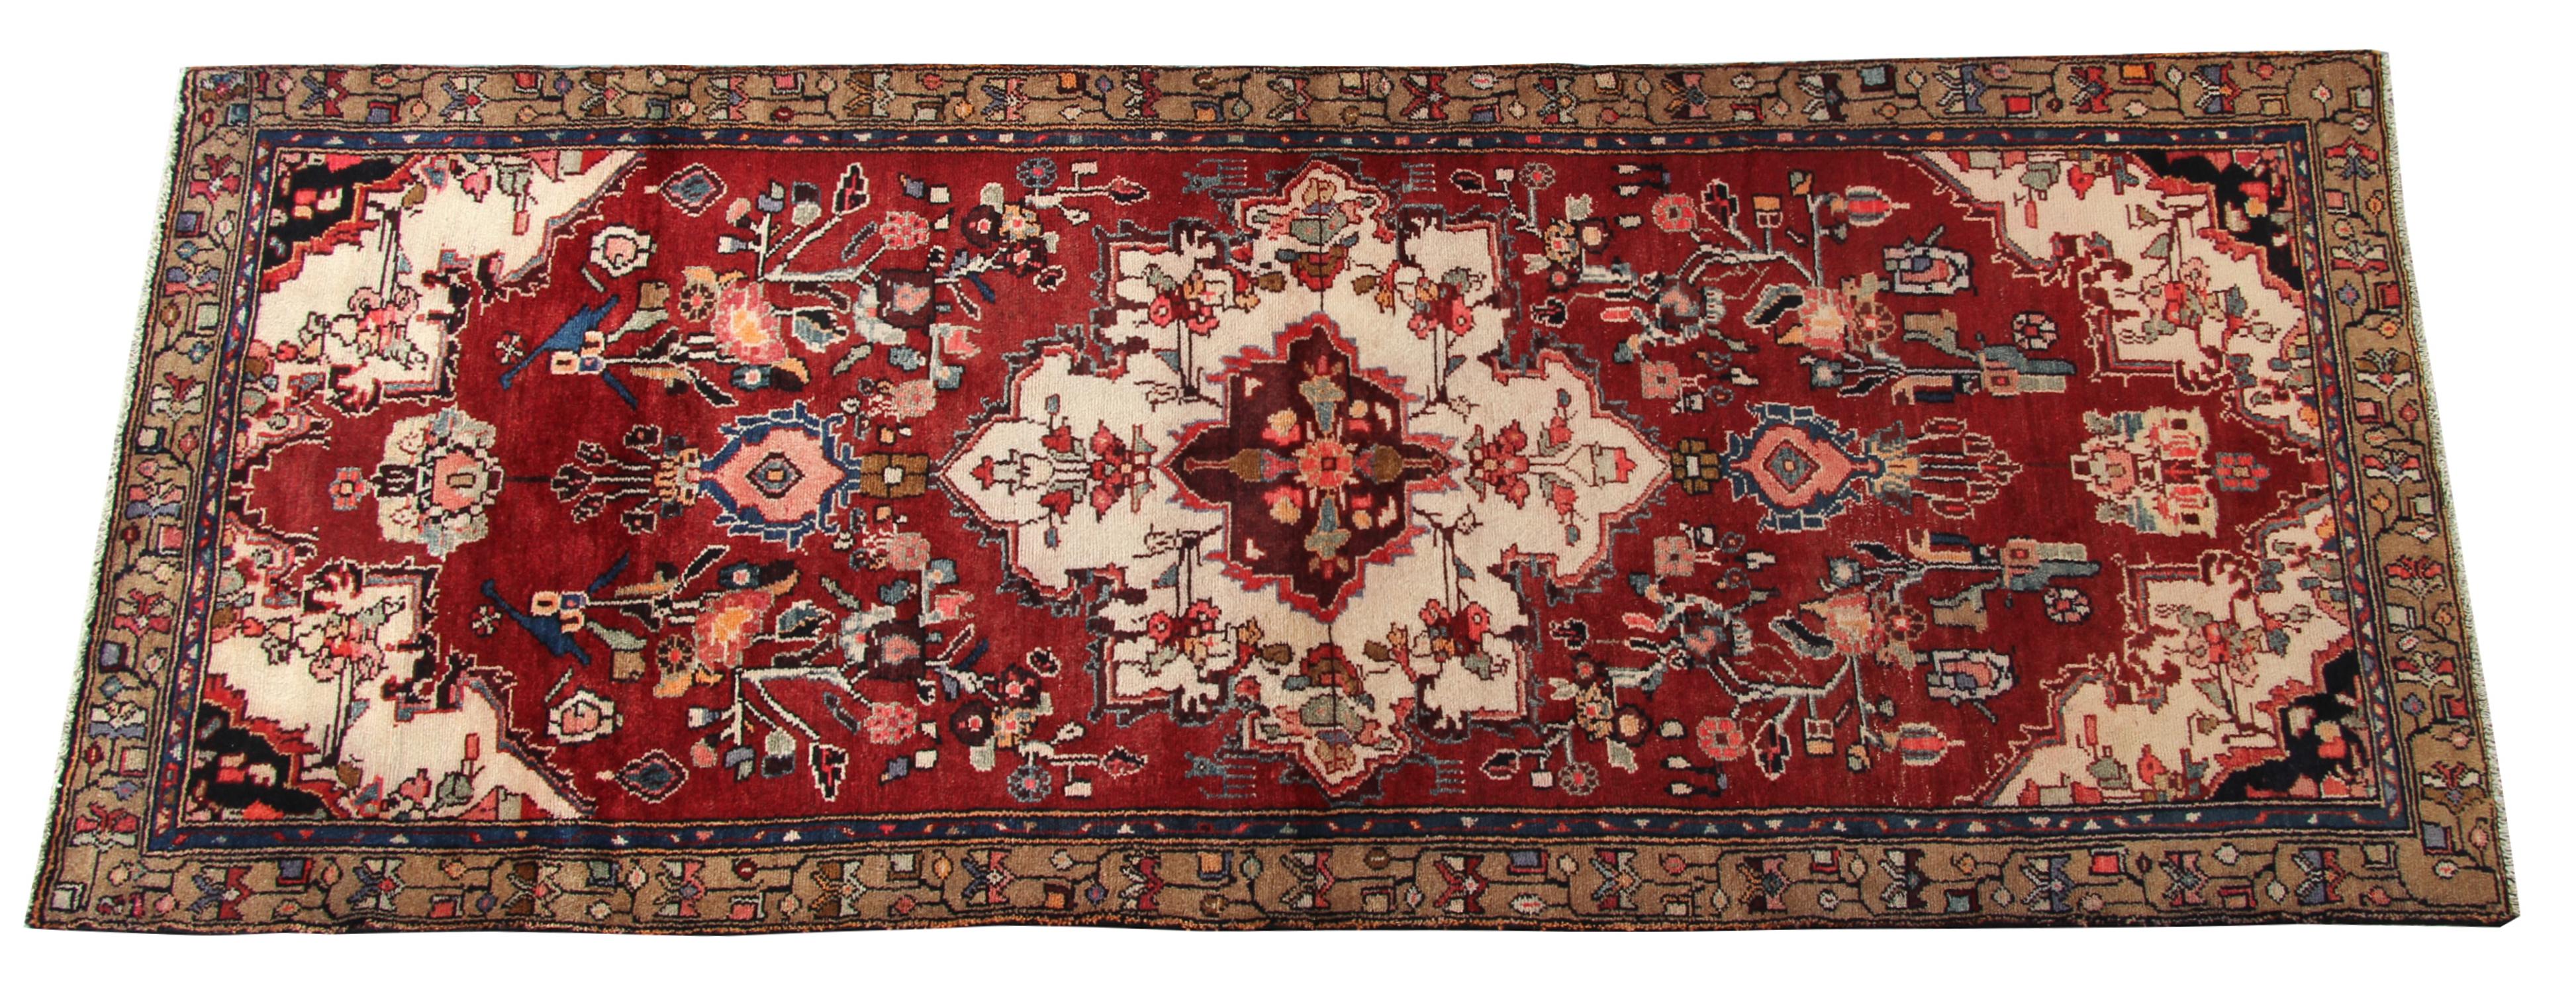 Tribal Handmade Carpet Red Runner Rug Decorative Traditional Red Vintage Rug 105x265cm For Sale